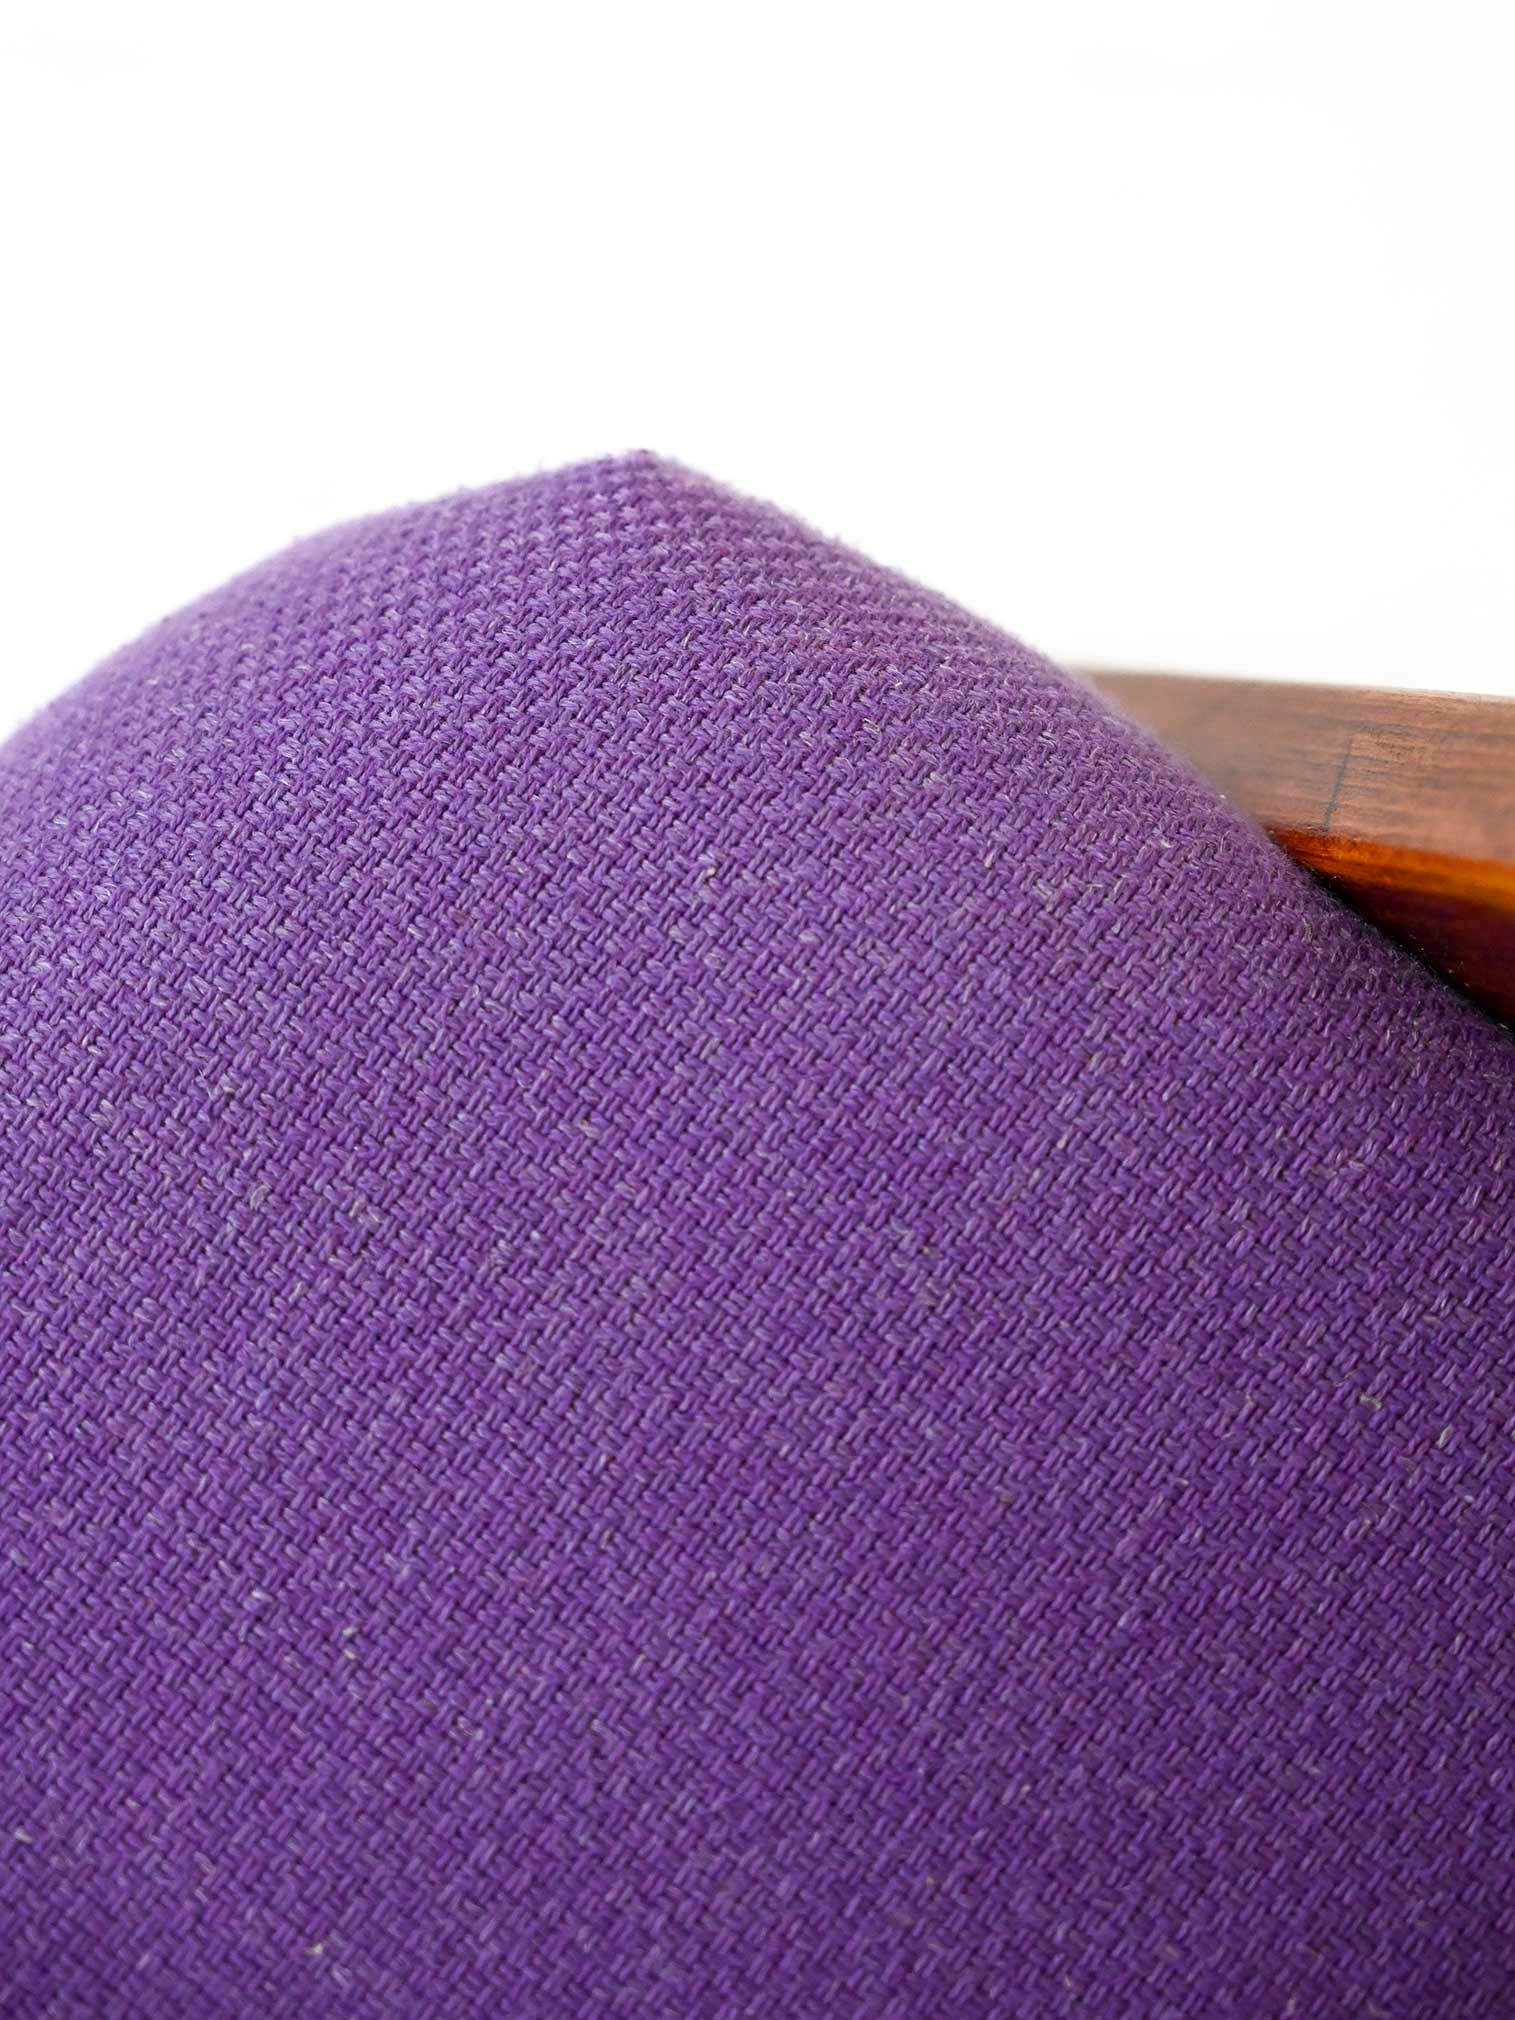 Scandinavian armchair with purple fabric For Sale 3